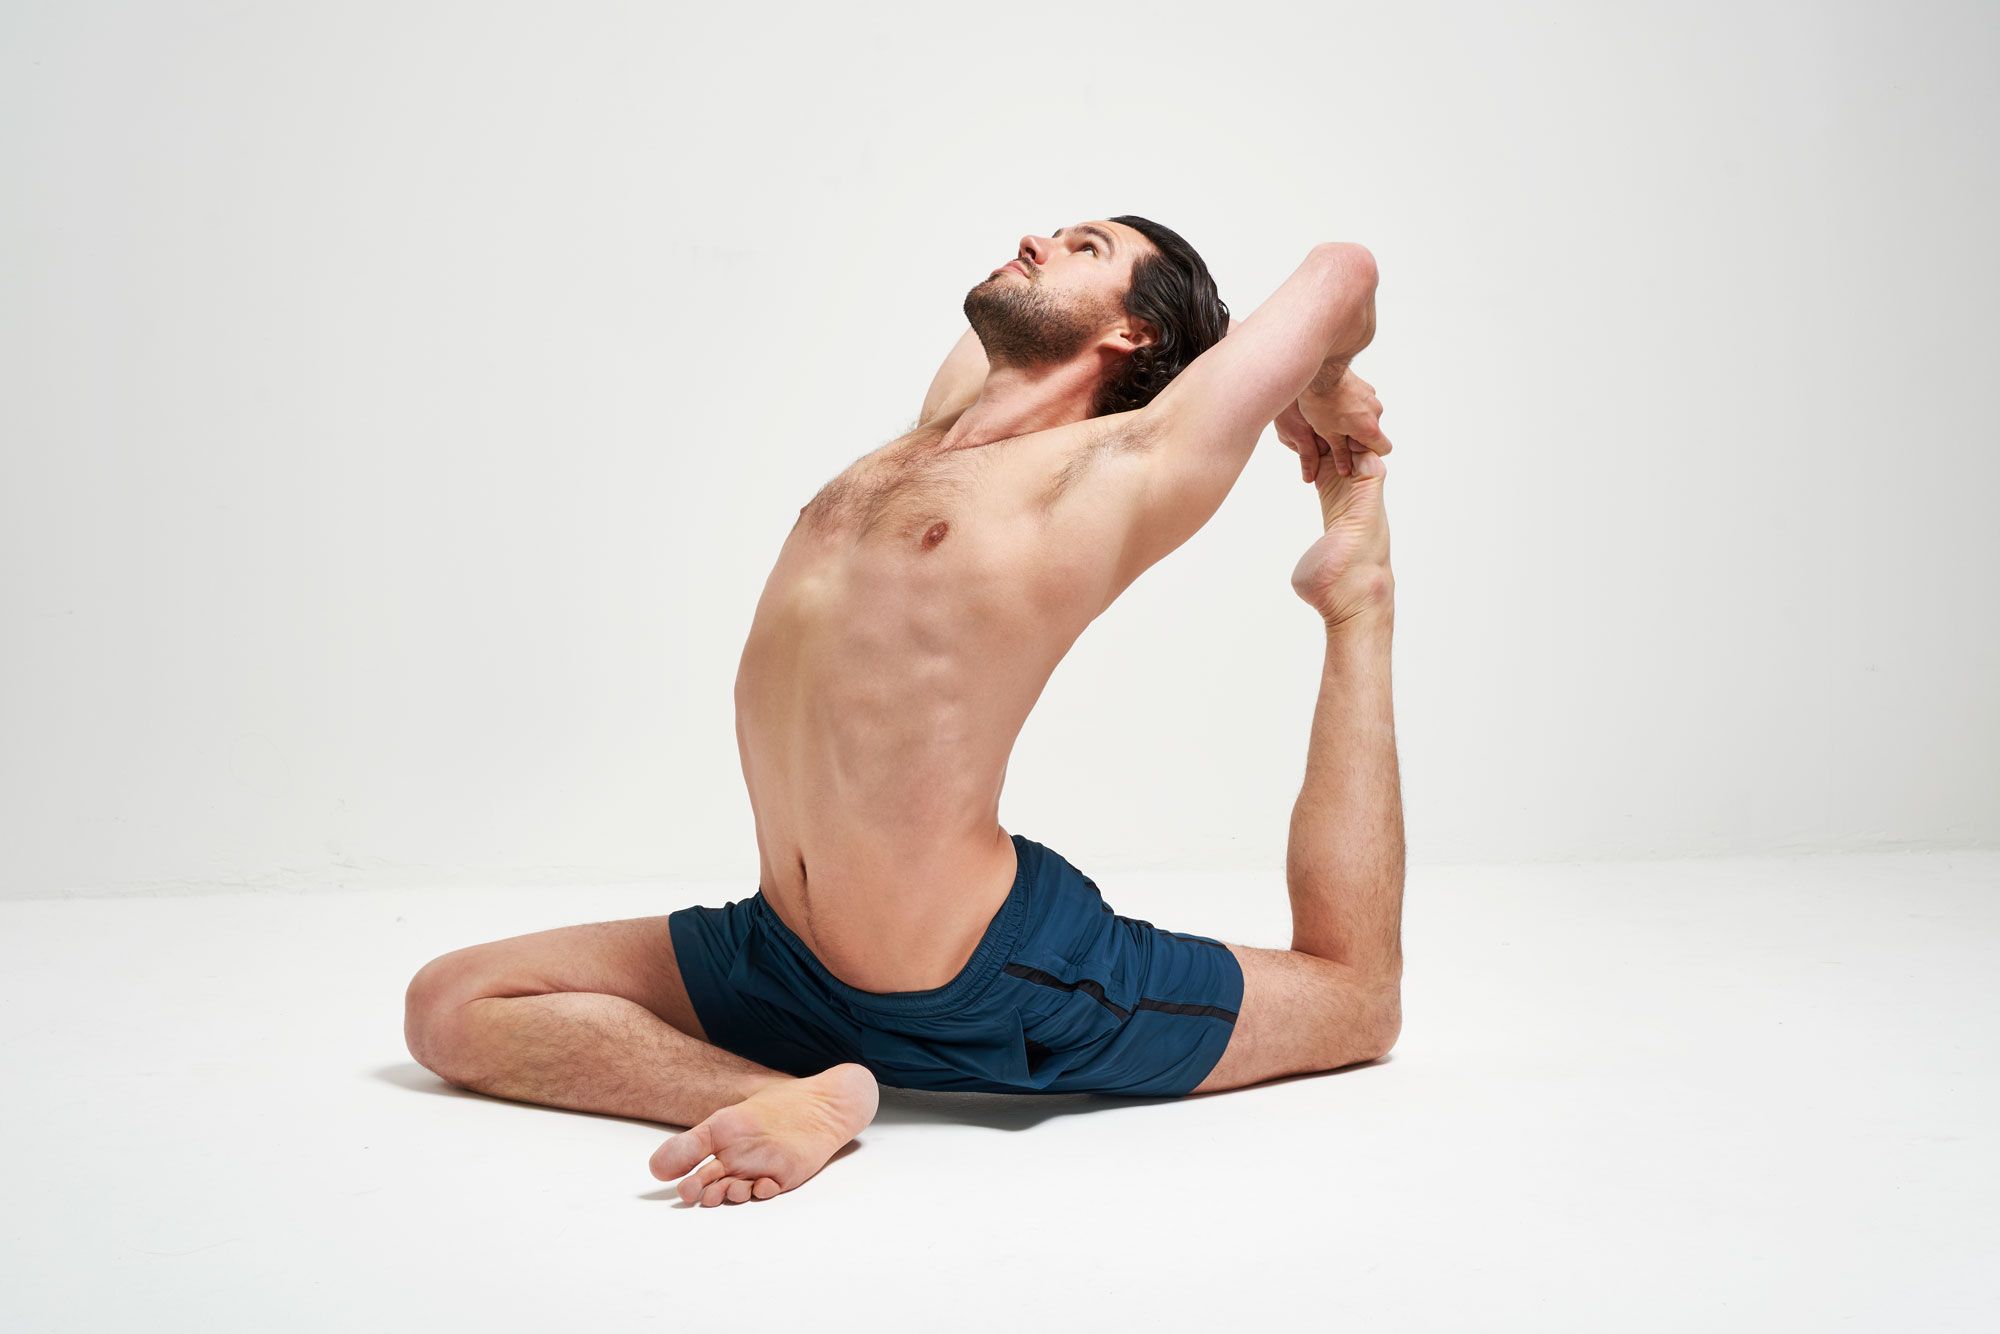 Premier Yoga Teacher, Adam Husler Explains How He Builds His Body